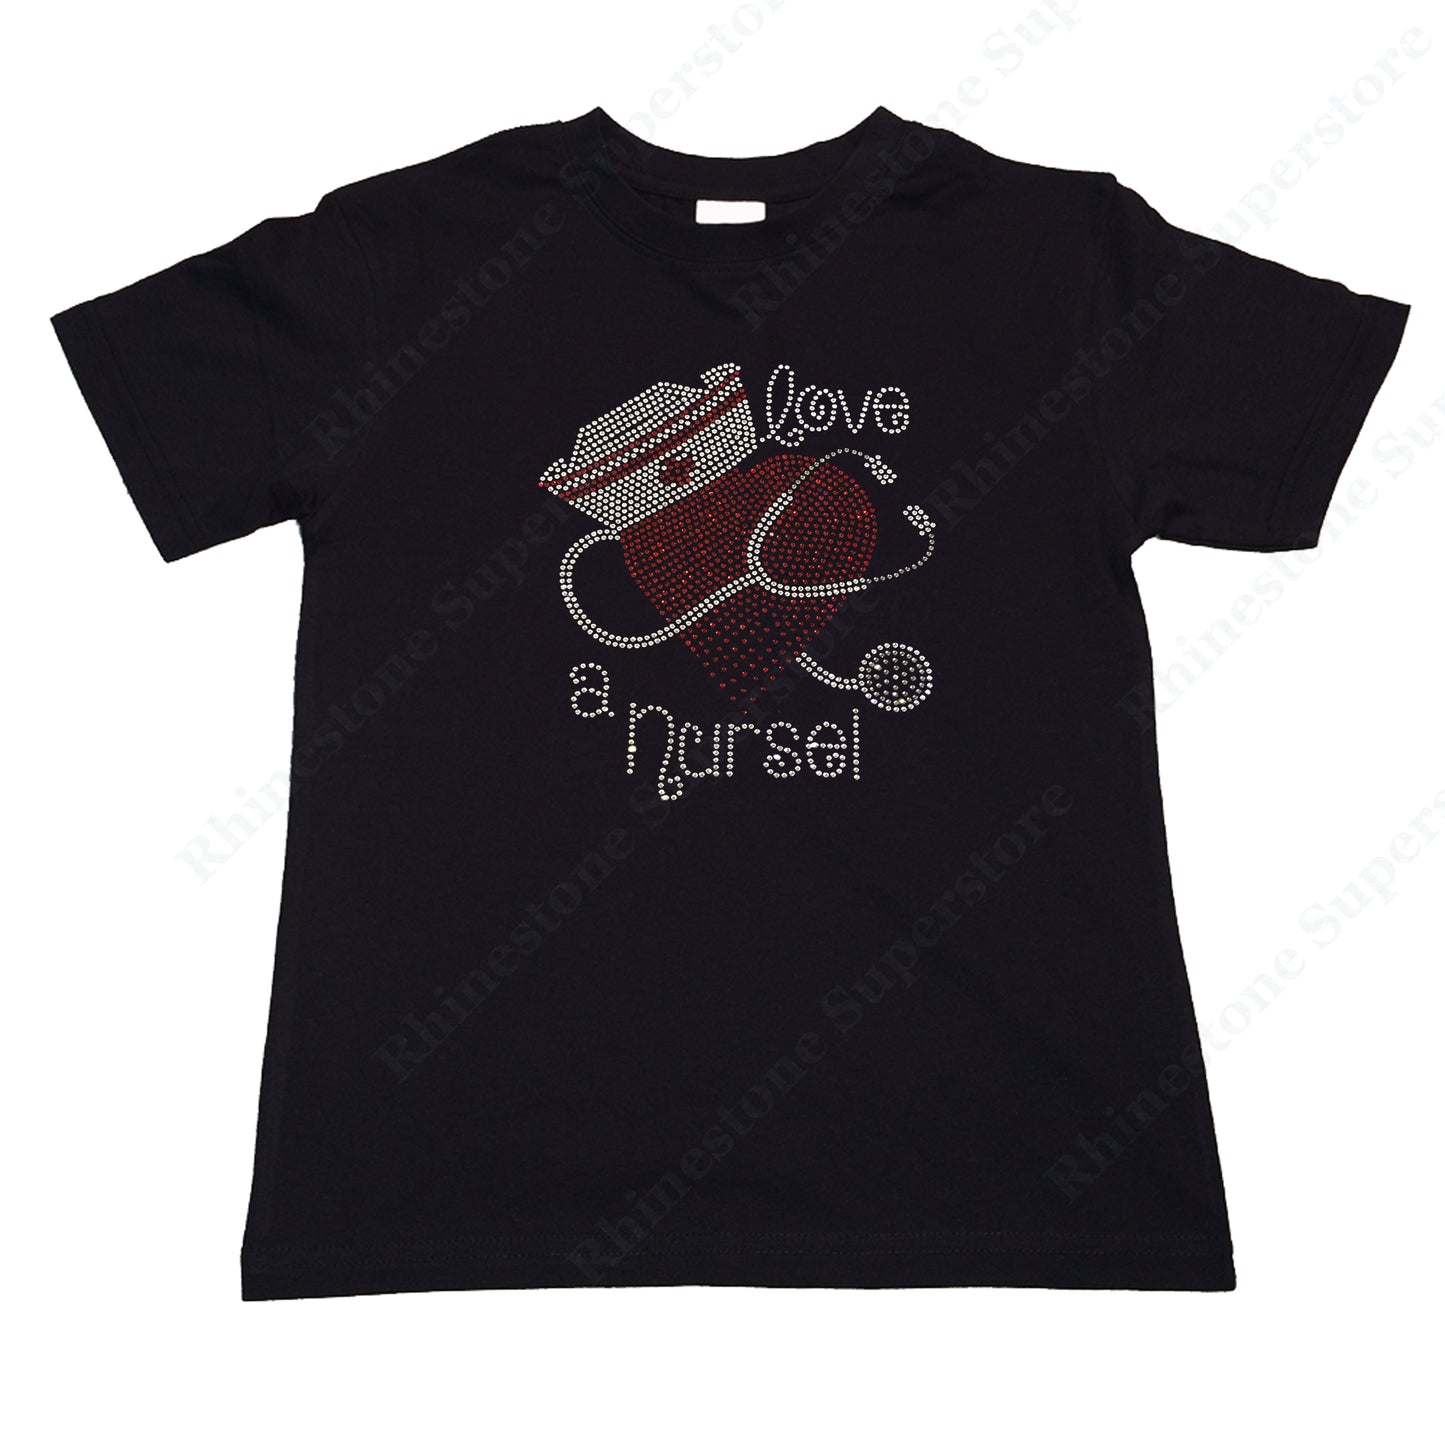 Girls Rhinestone T-Shirt " Love a Nurse in Rhinestones " Kids Size 3 to 14 Available